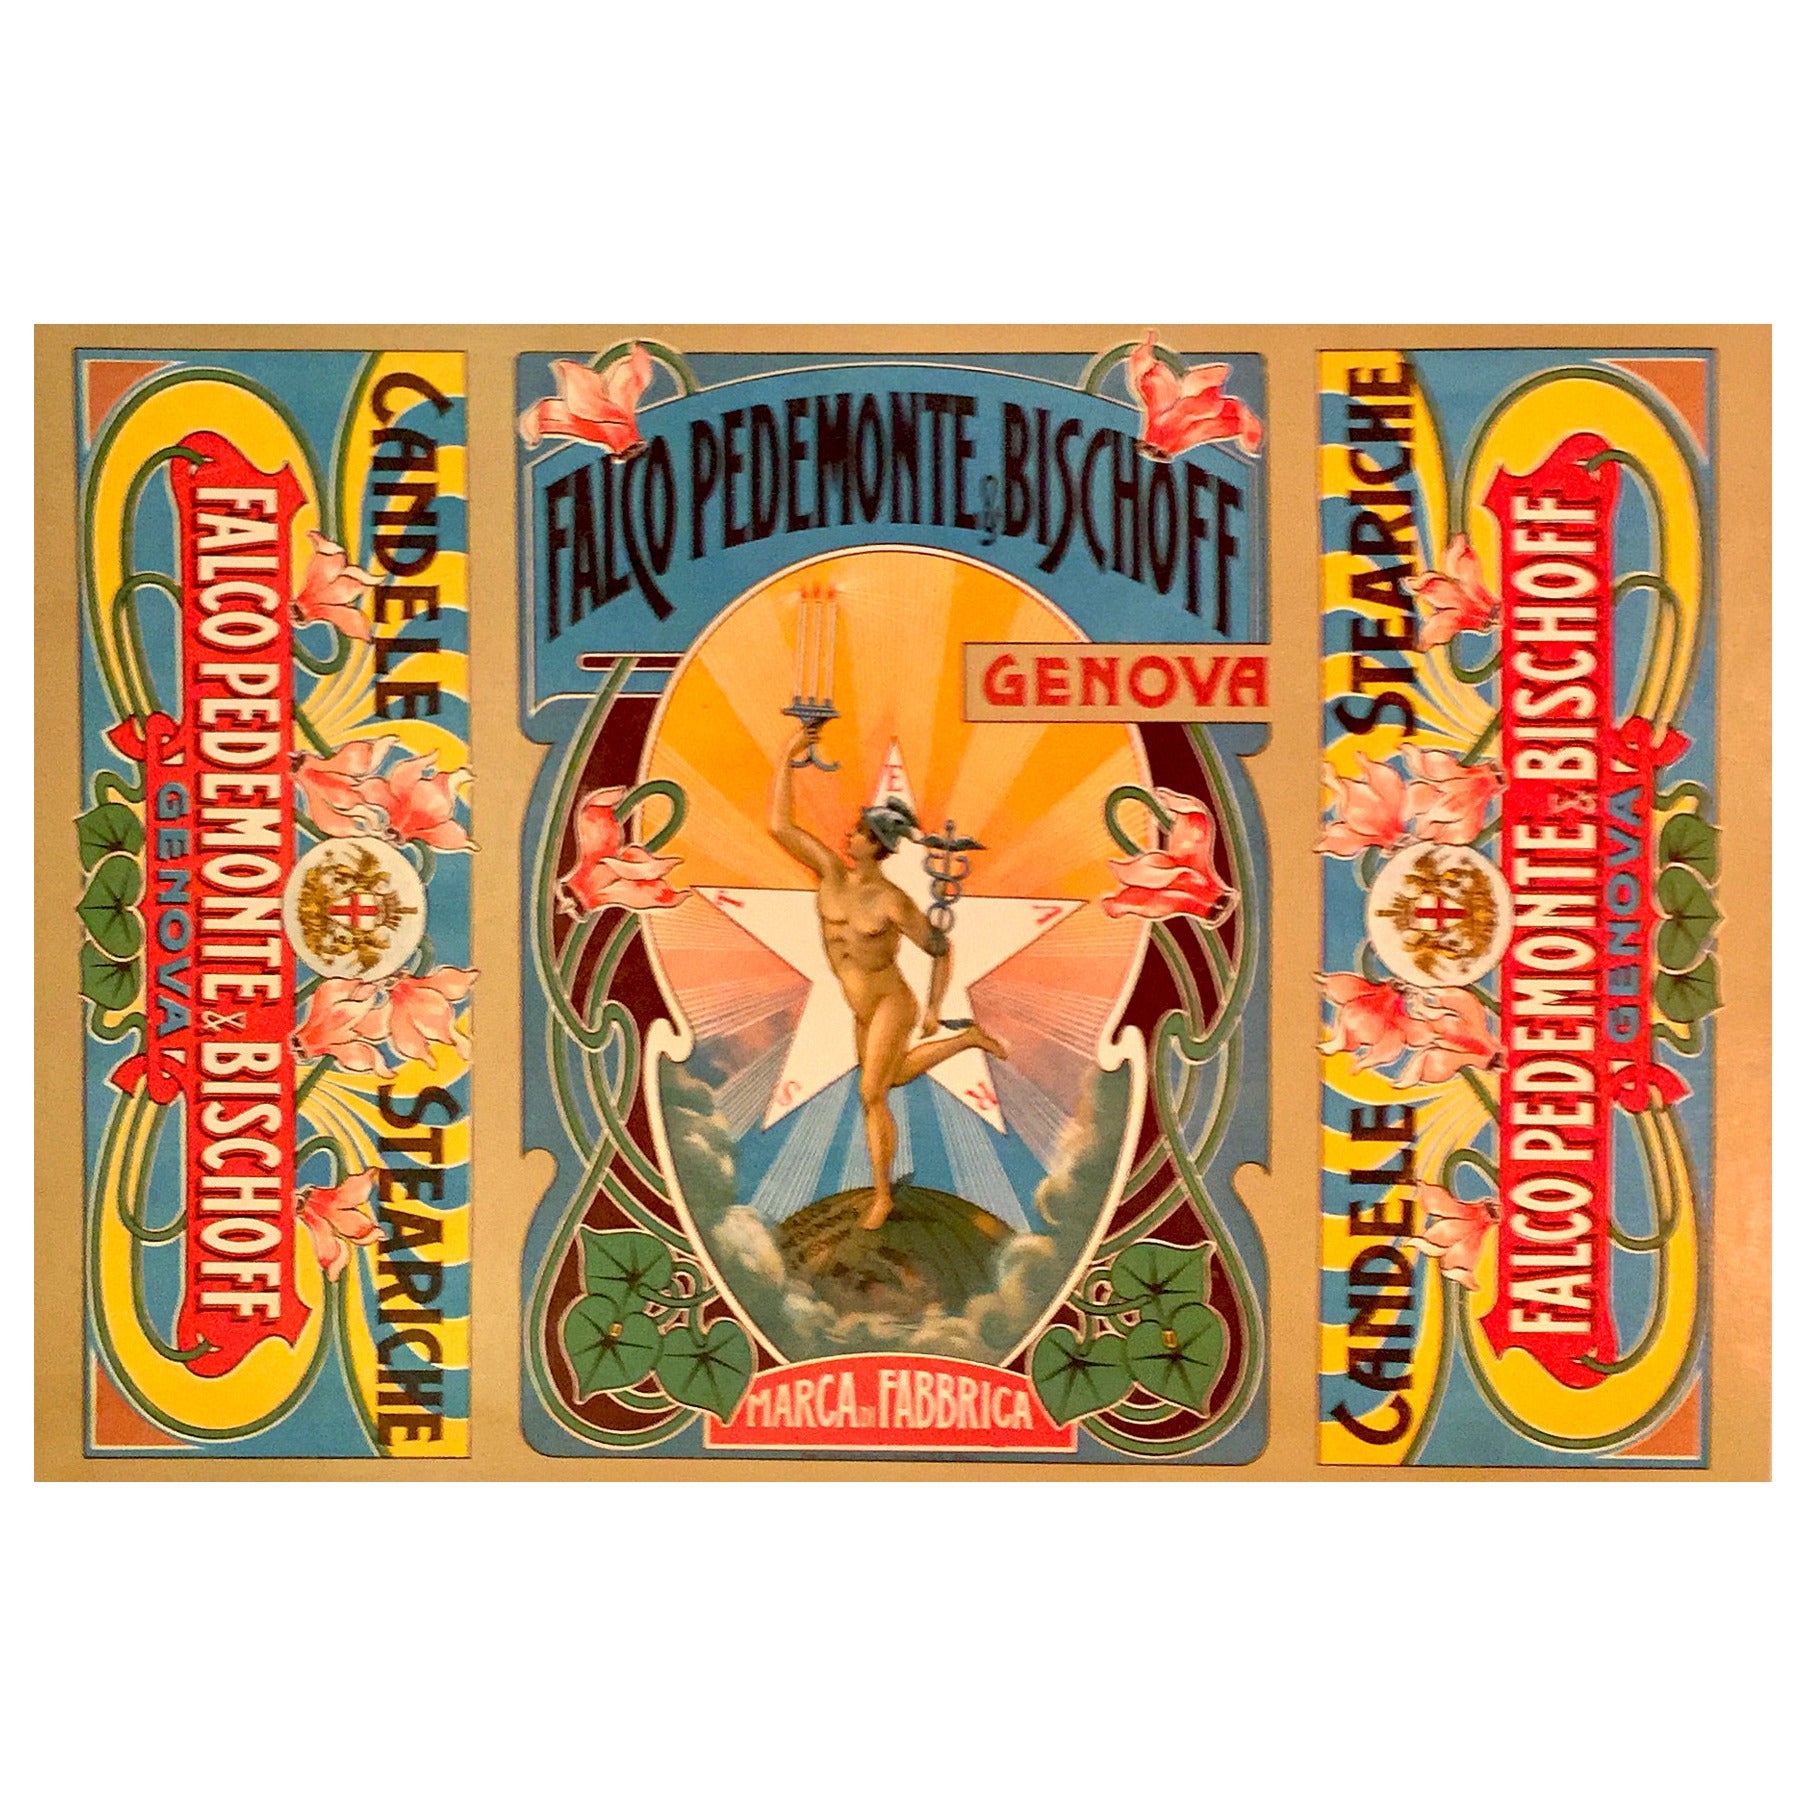 Italian Art Nouveau Period Label for Falco Pedemonte & Bischoff, 1900s For Sale